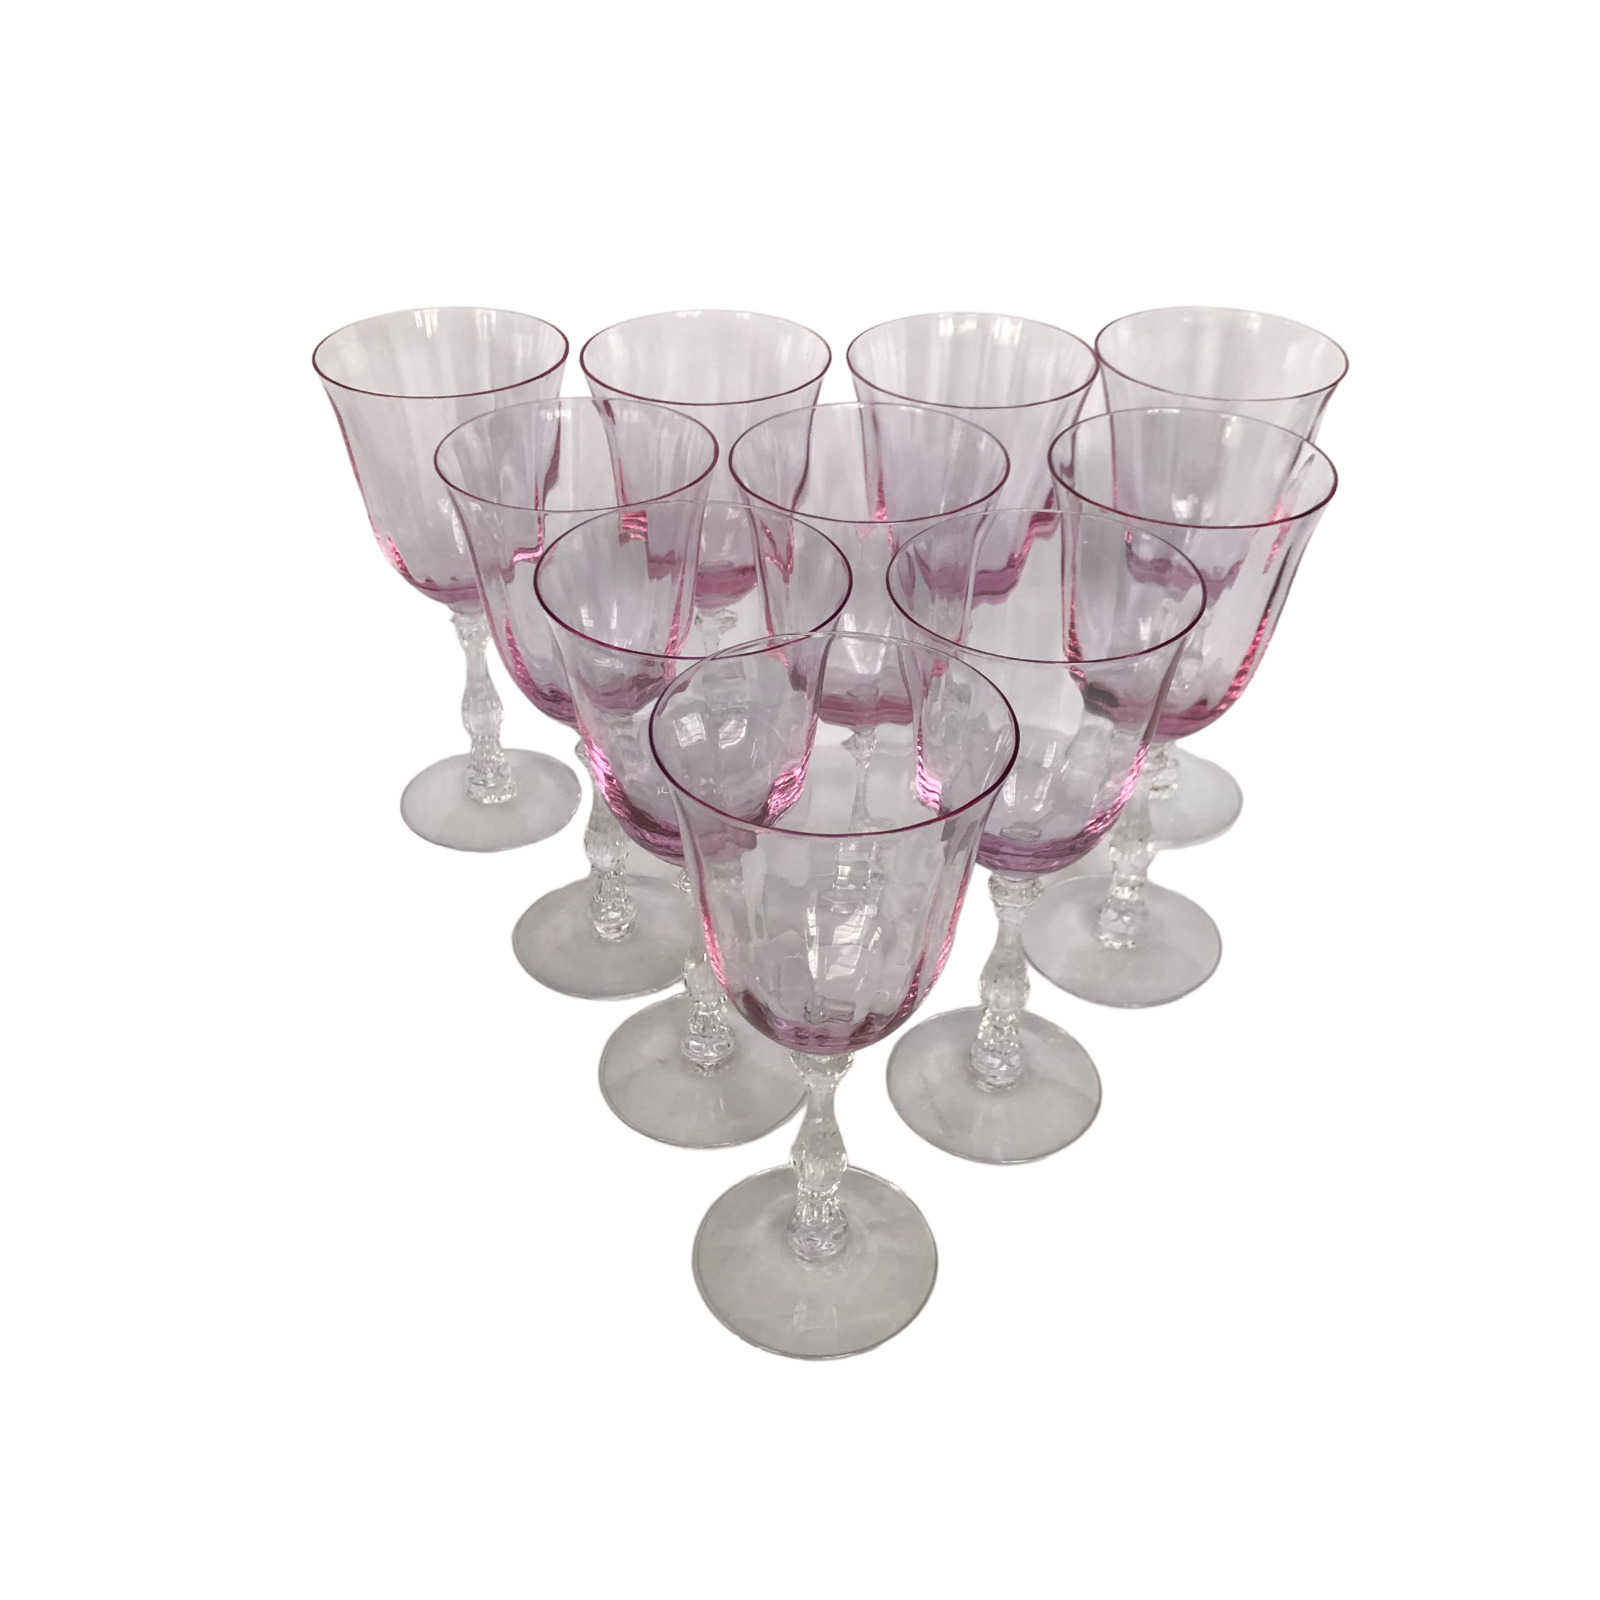 FOSTORIA Mid-Century Vintage Collectible Wine Glasses/Stems Set 0f 10 Pale Pink